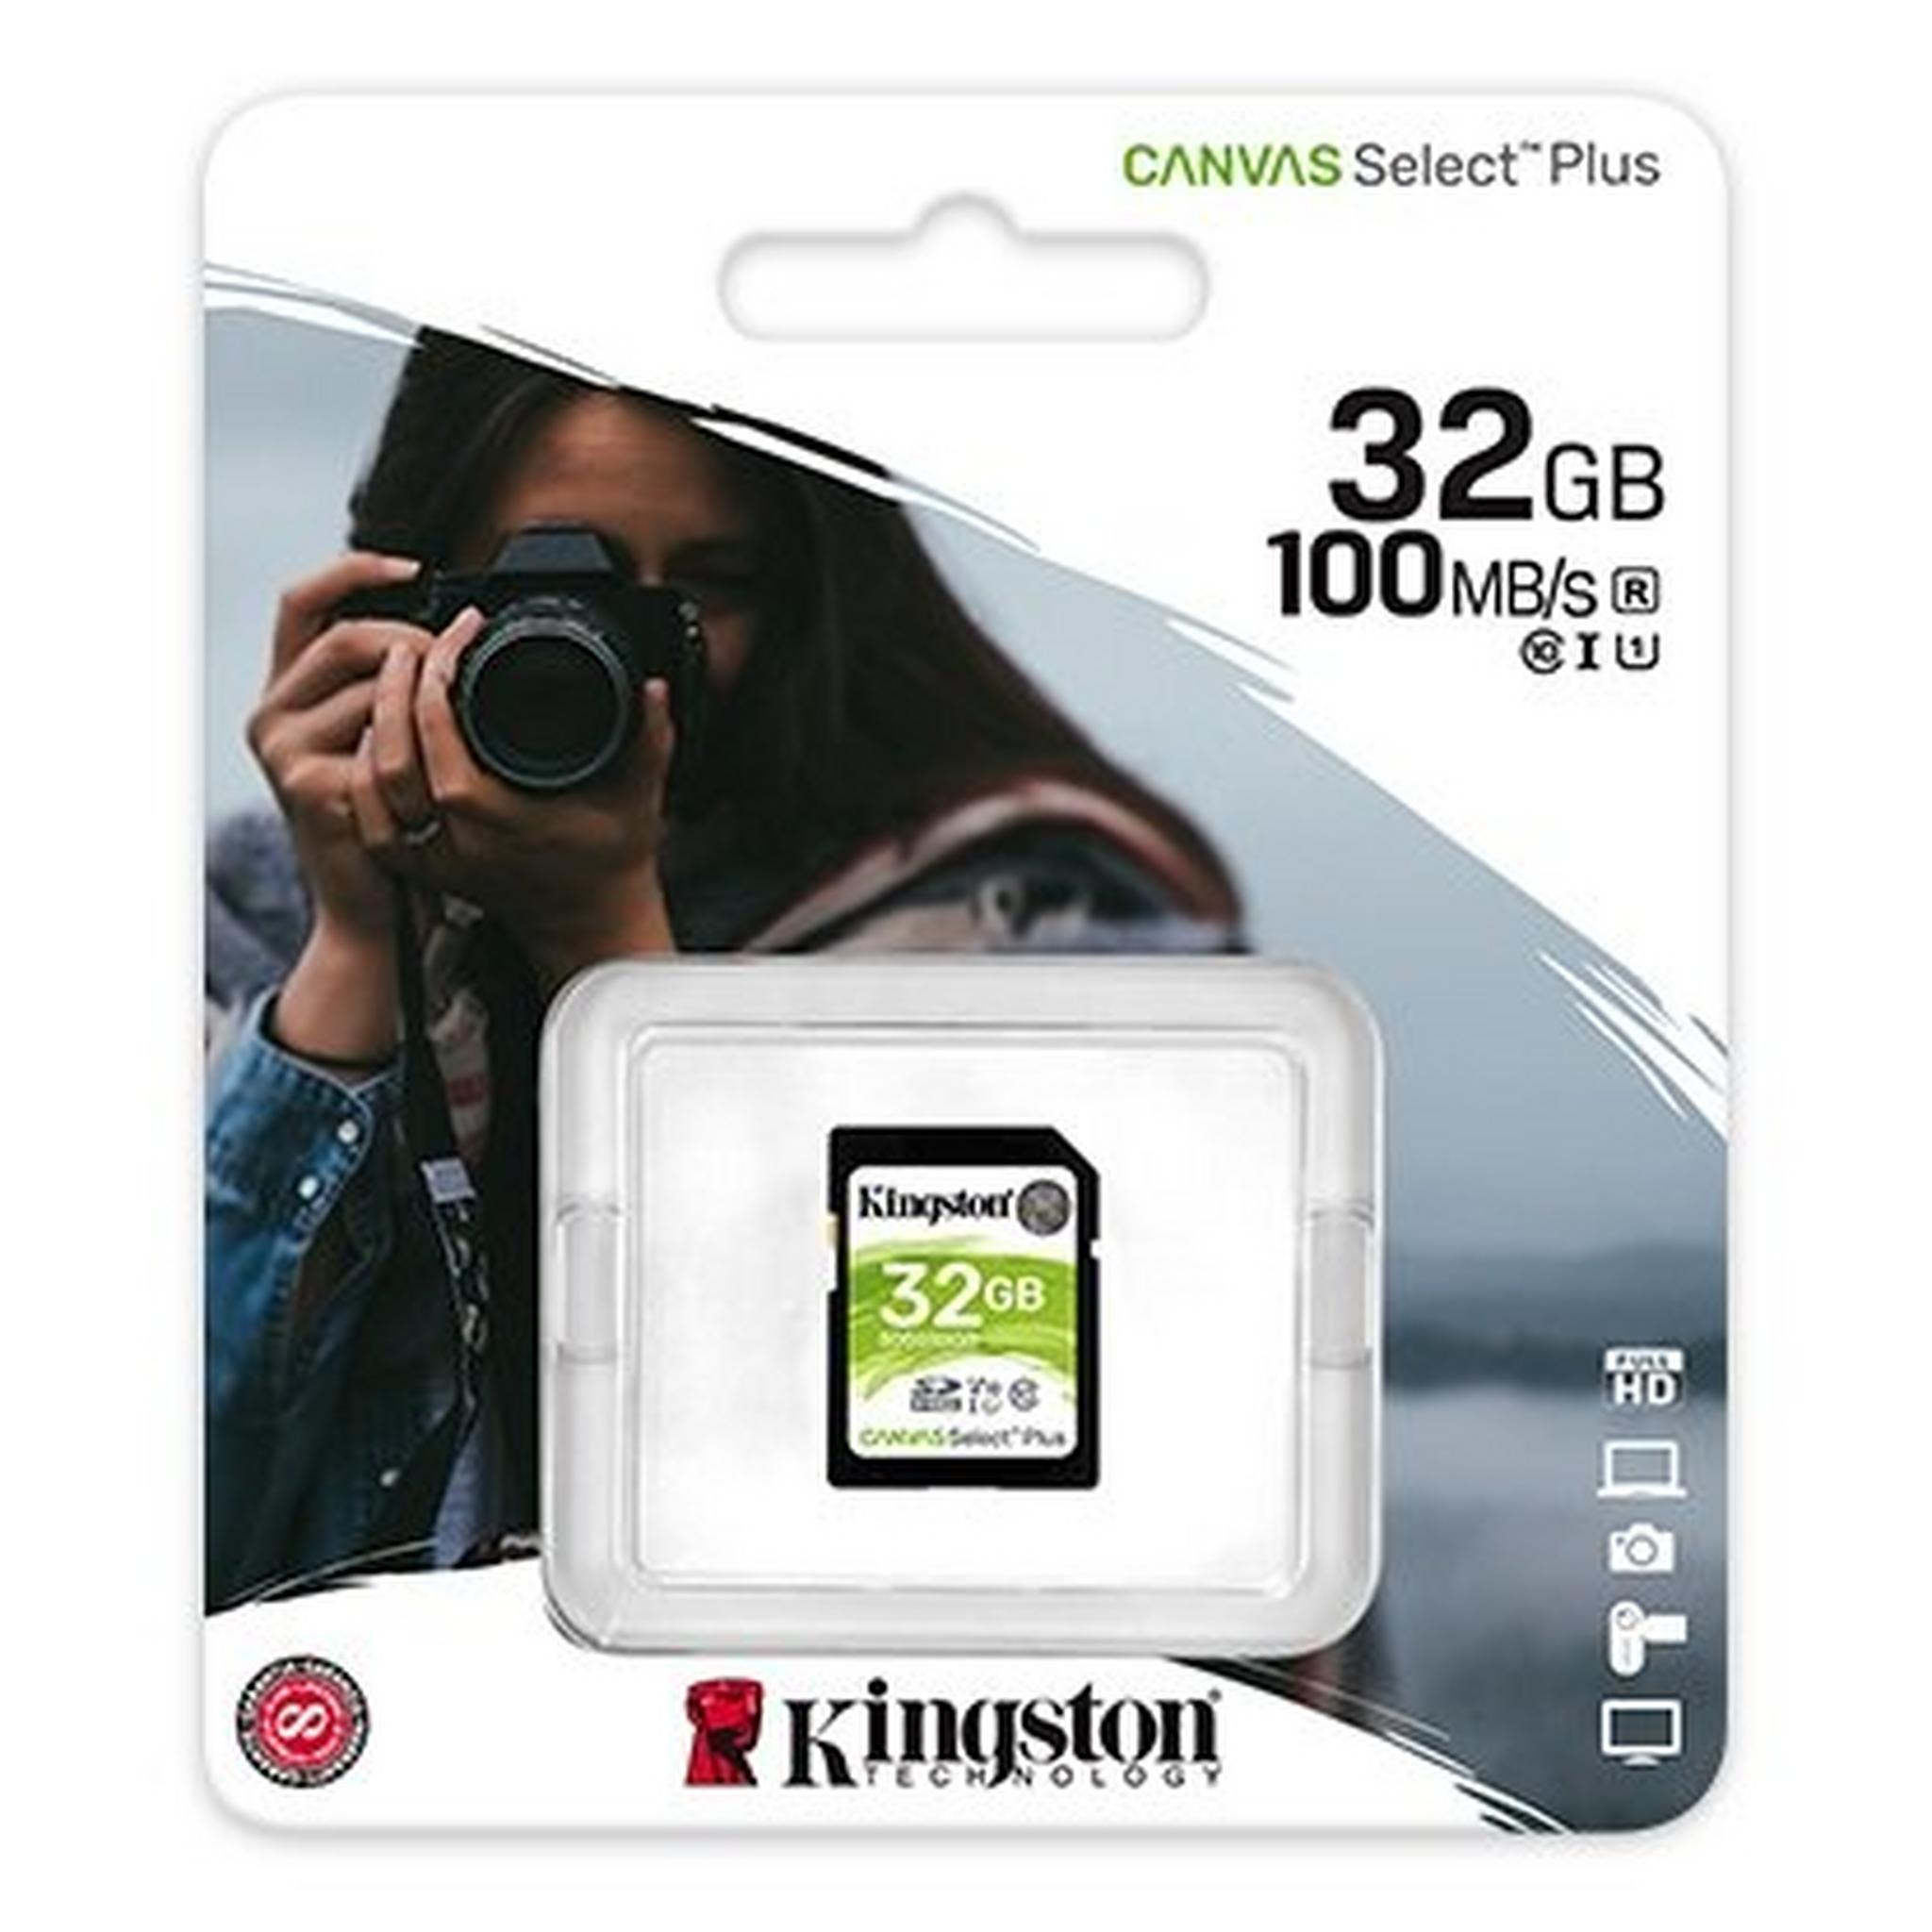 Kingston Canvas Select Memory Card 32GB SDXC UHS-I Plus SD Card